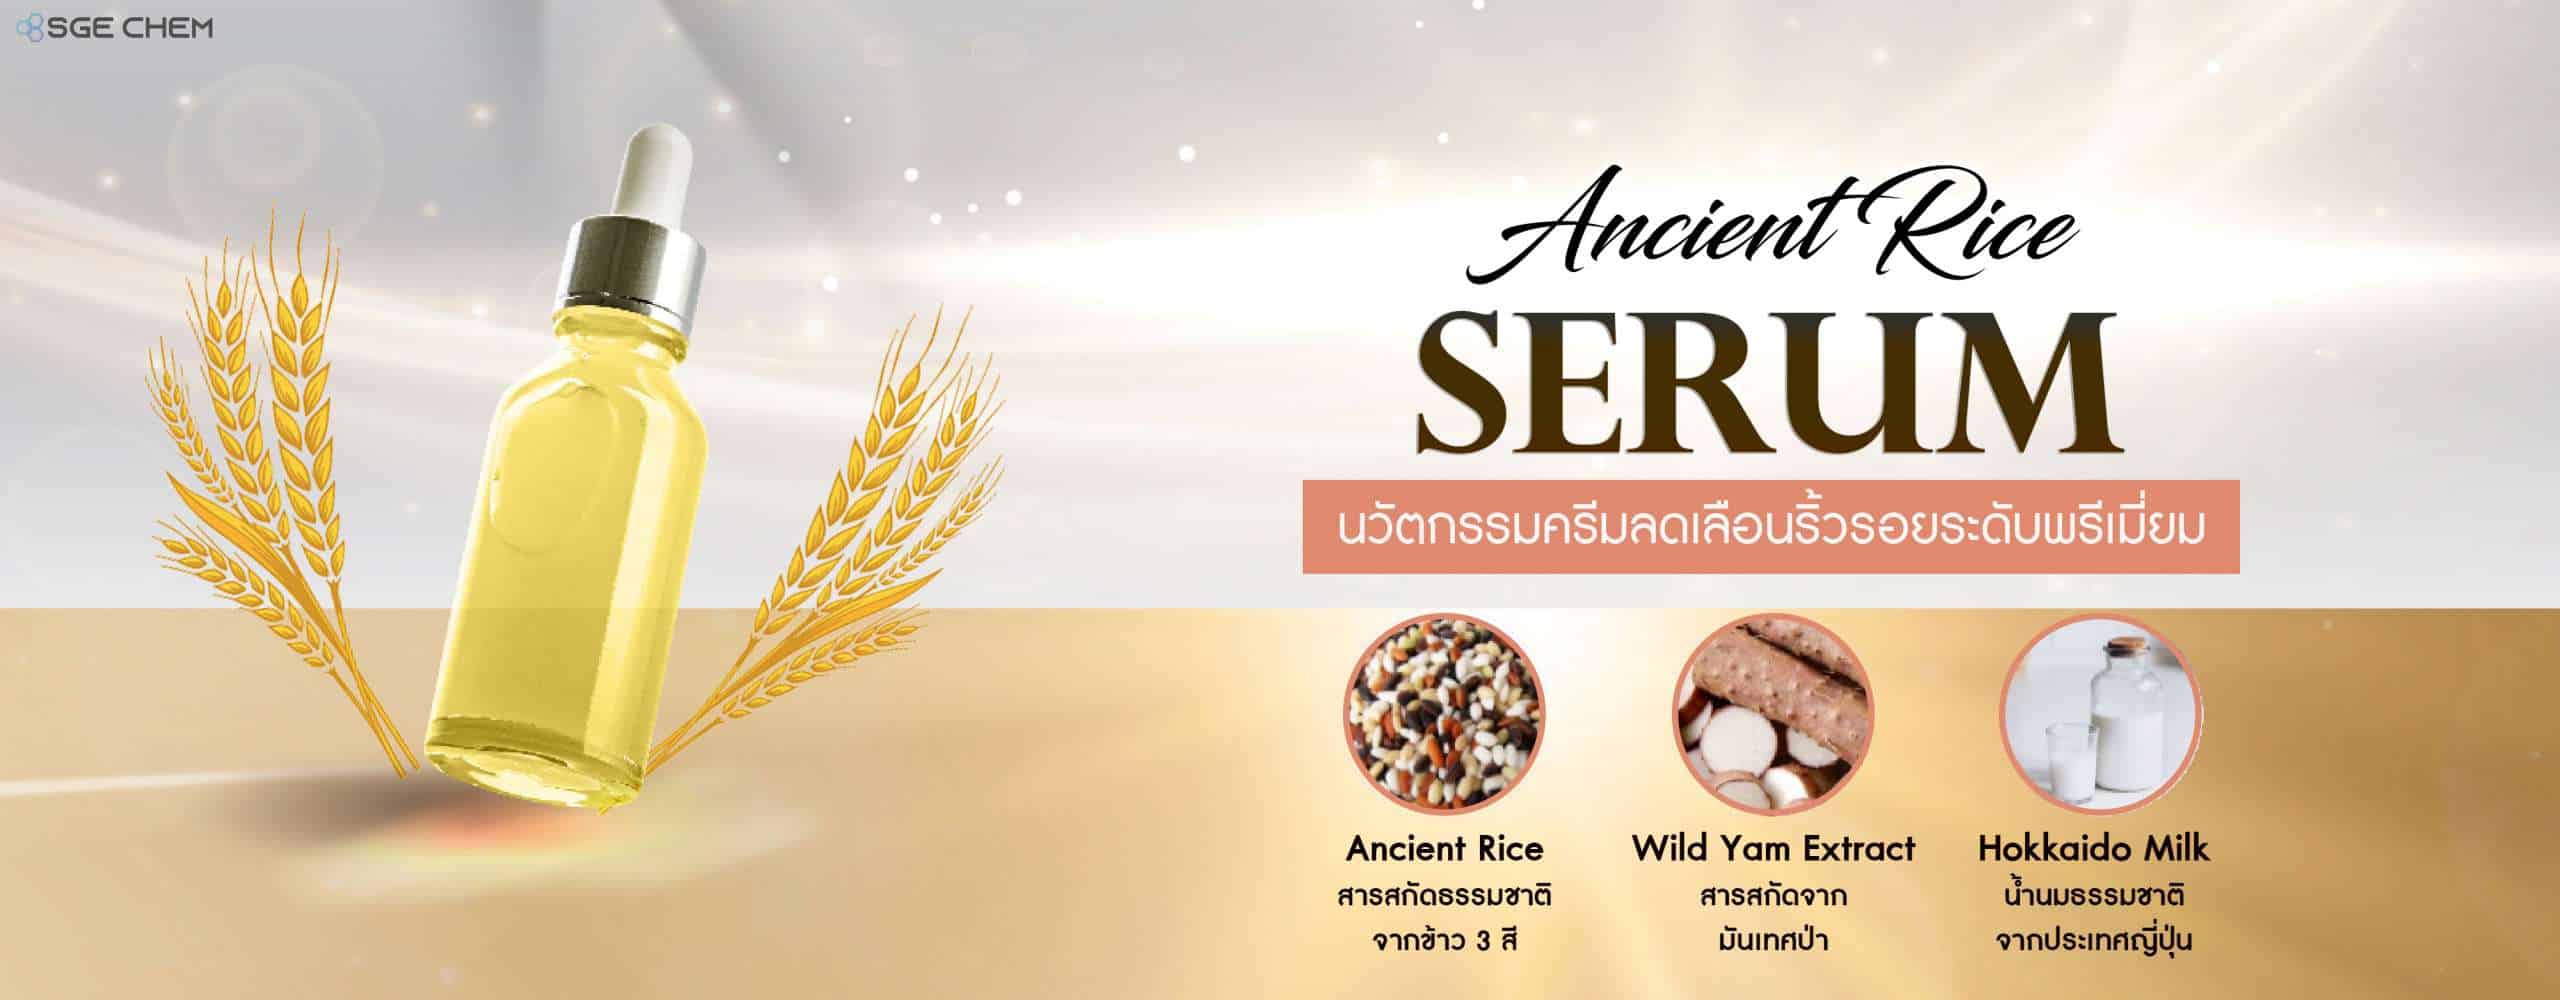 Ancient Rice Serum